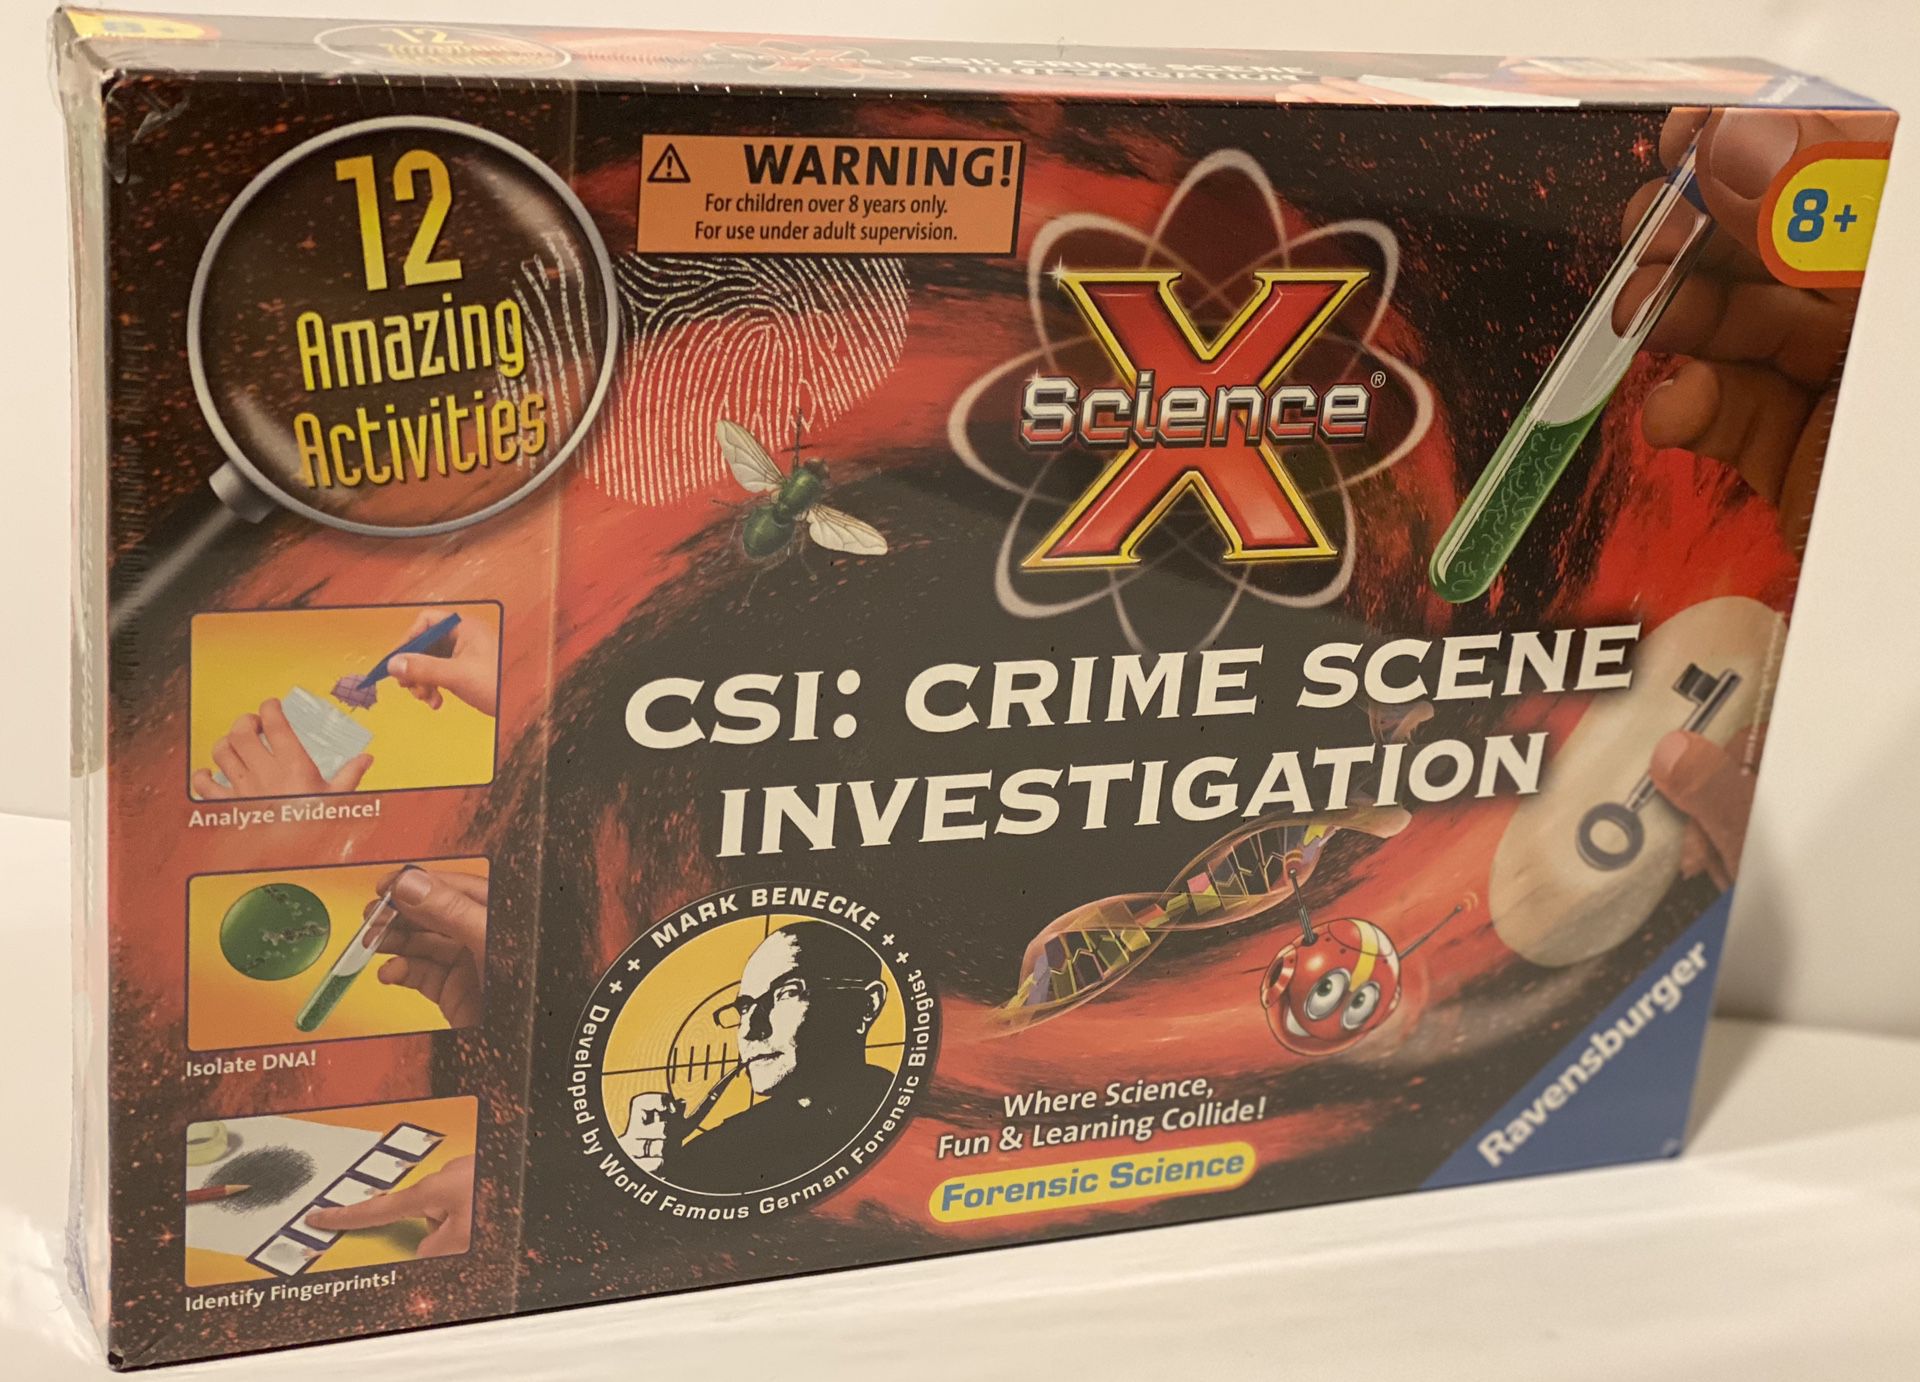 CSI education game for kids 8+